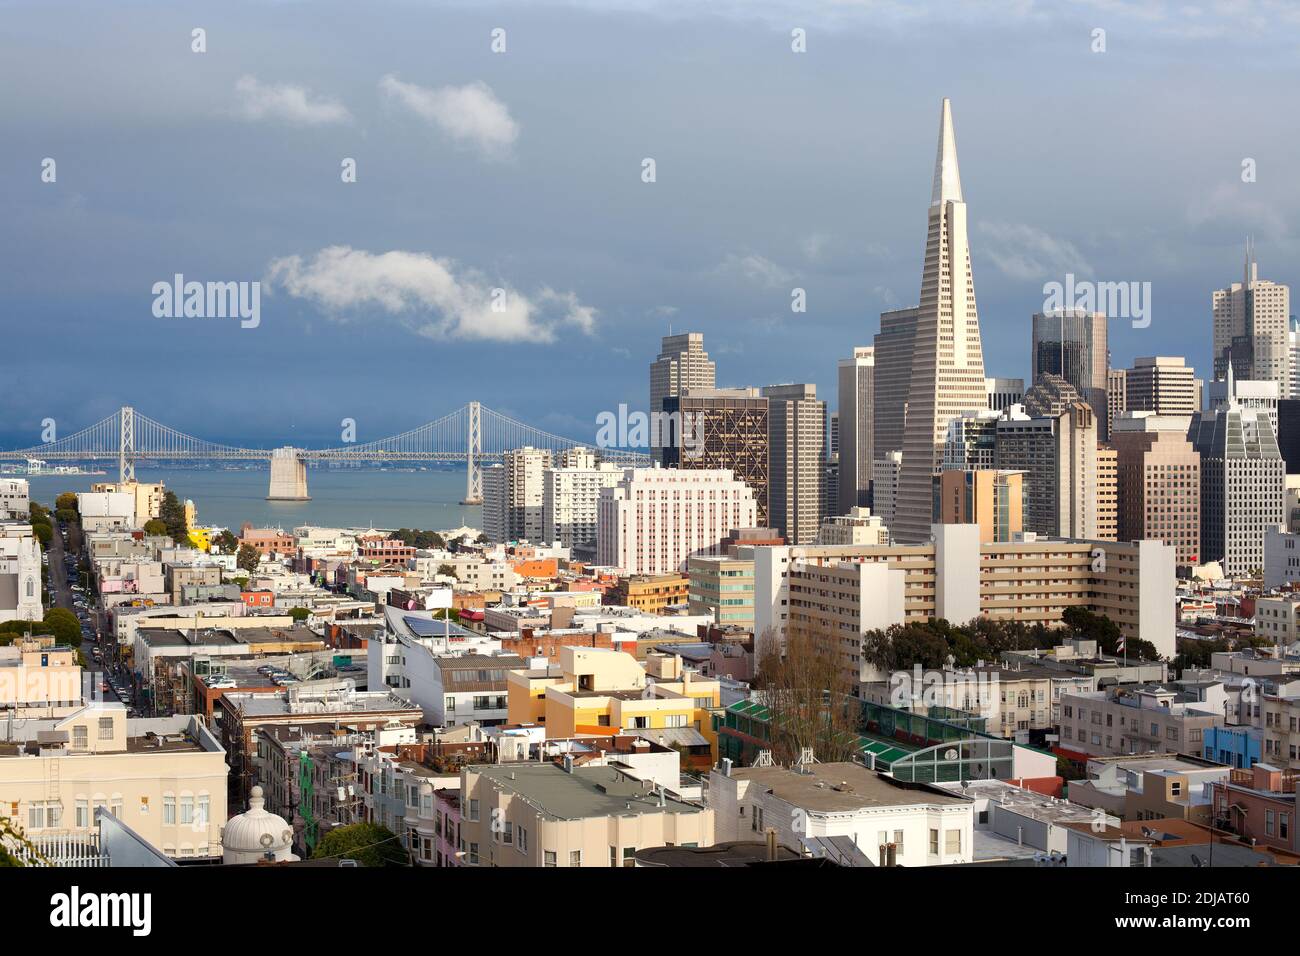 Cityscape of Financial District and san francisco-oakland bay bridgee, San Francisco, California, United States Stock Photo